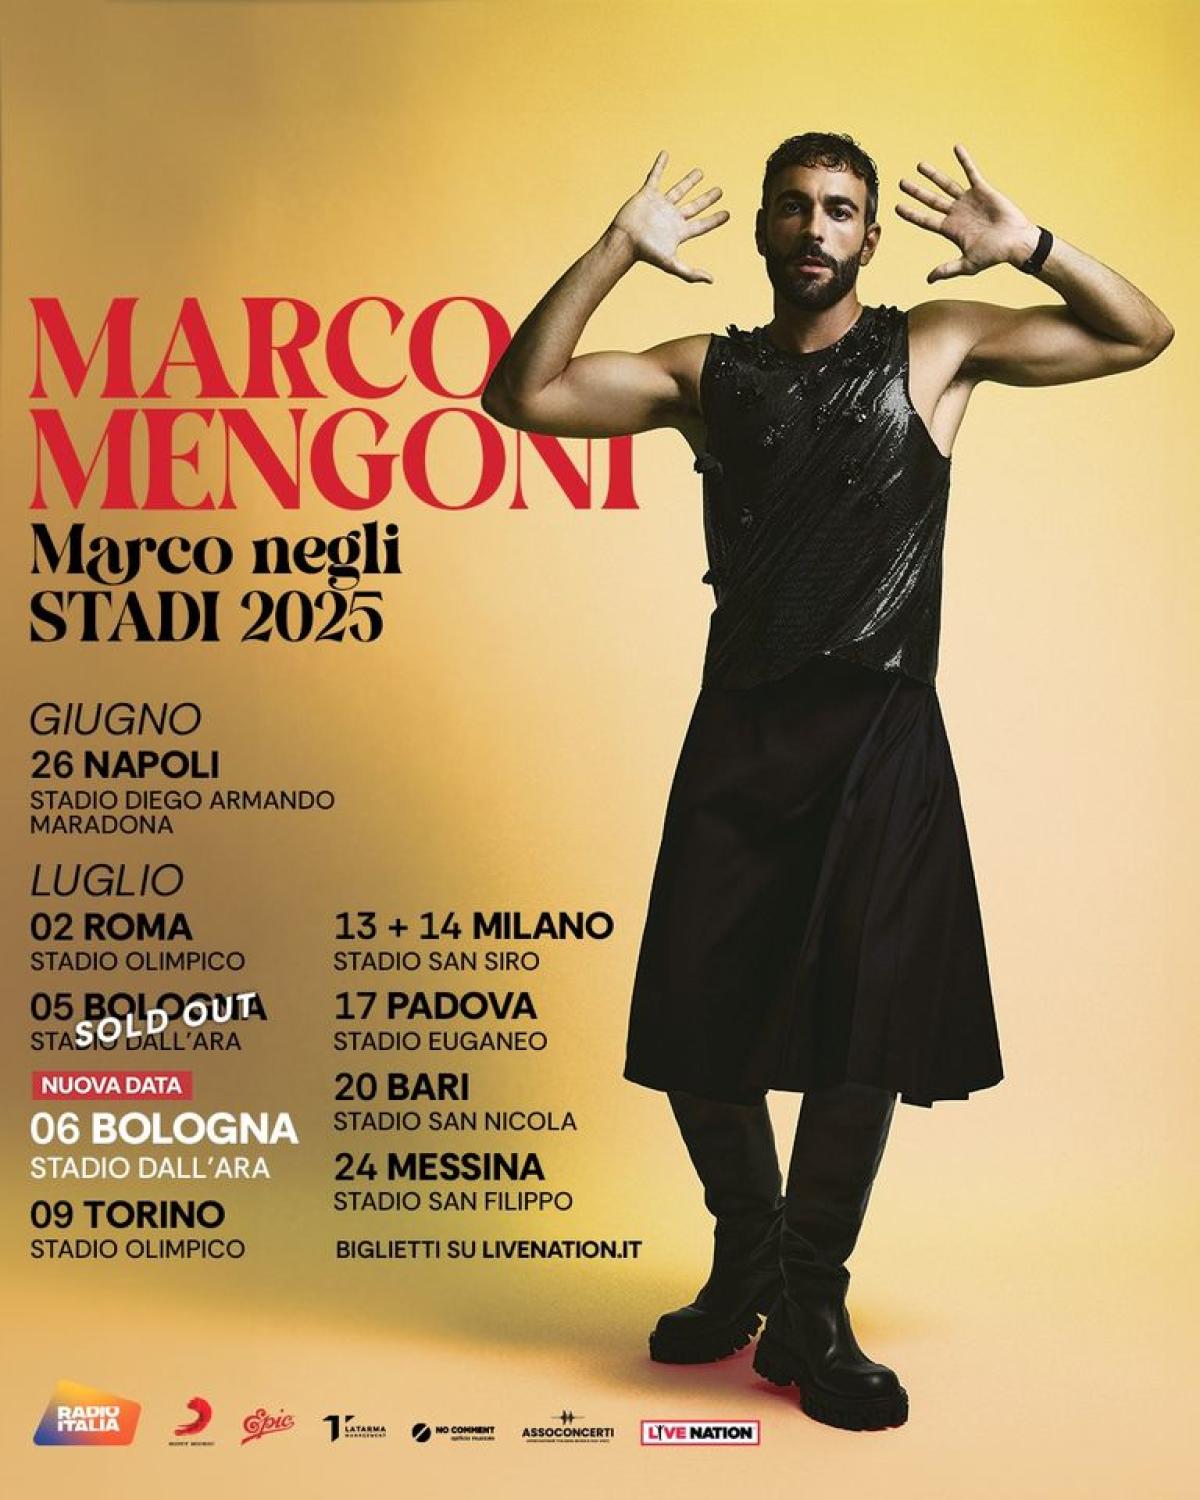 Marco Mengoni at Stadio Dall'ara Tickets